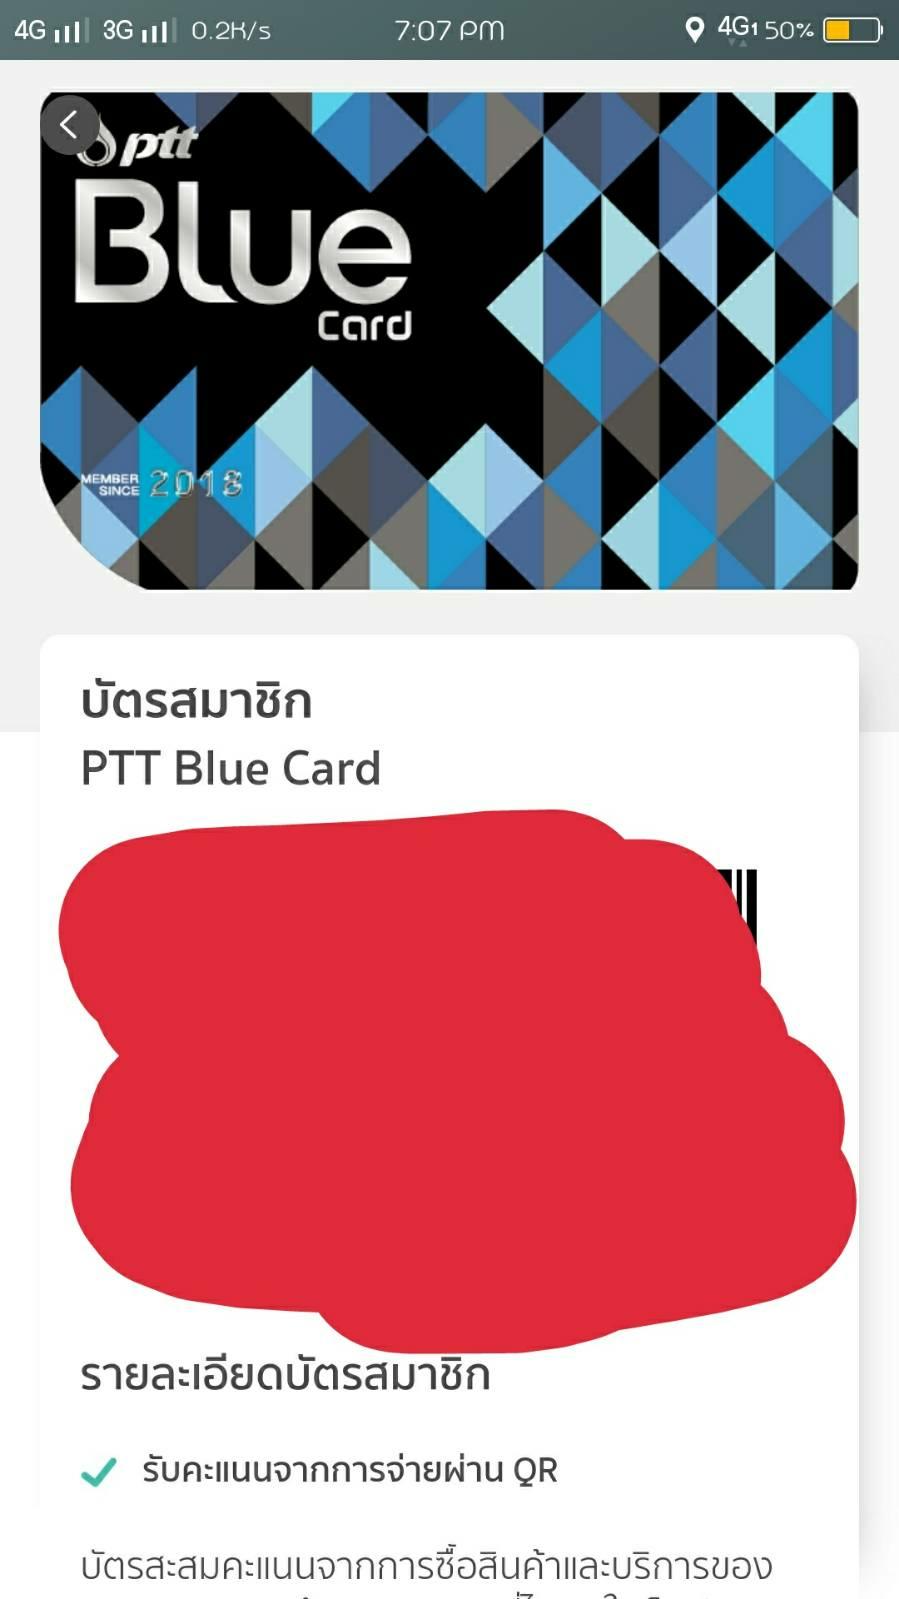 Ptt Blue Card ใน Kbank ใช้ยังไง - Pantip